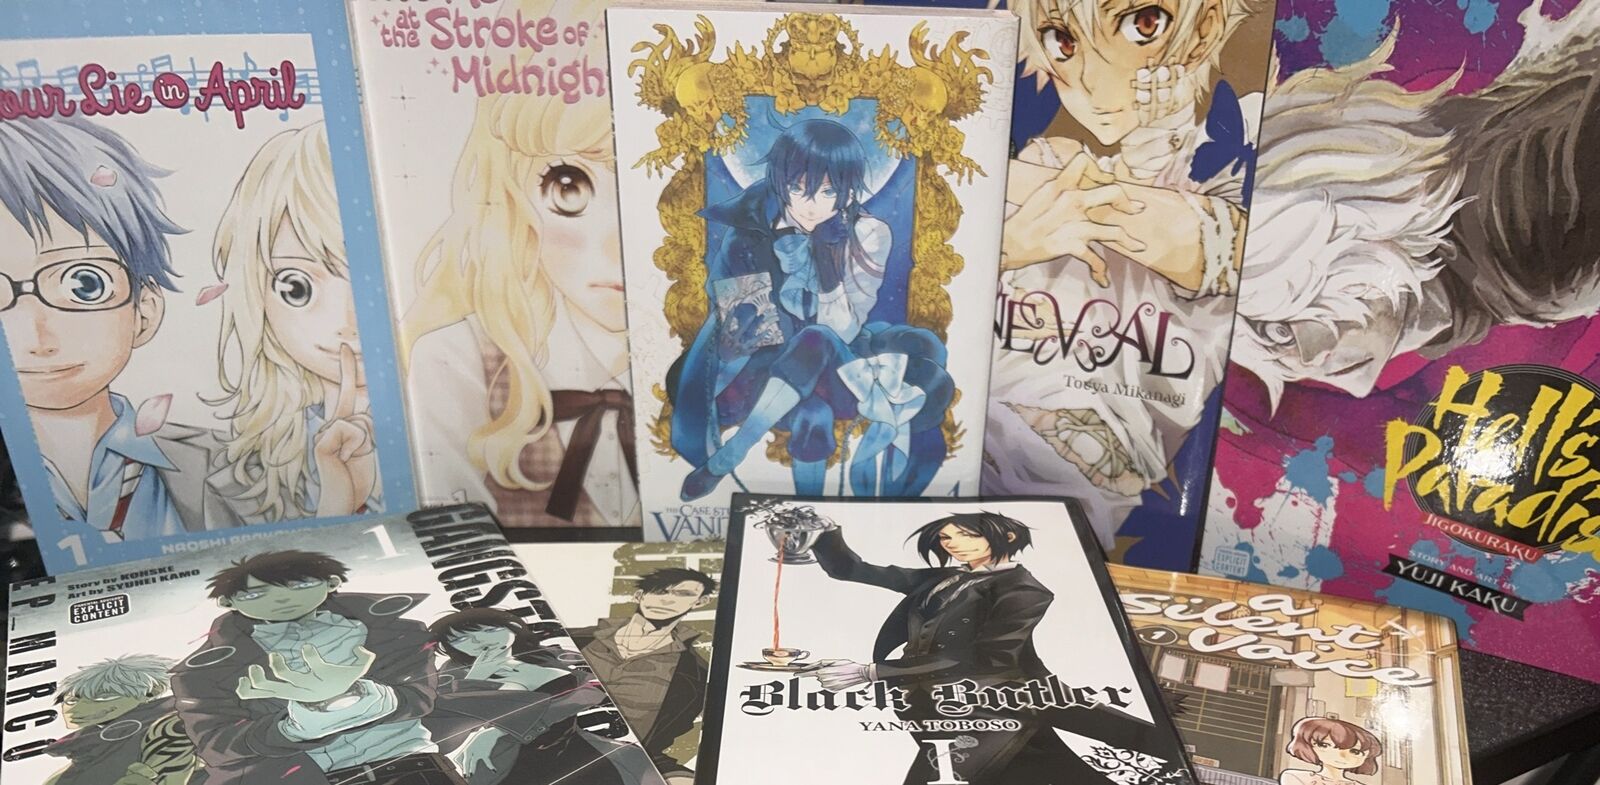 Random Mixed Lot Of 9 Manga Books Graphic Novels English Version Mature Content